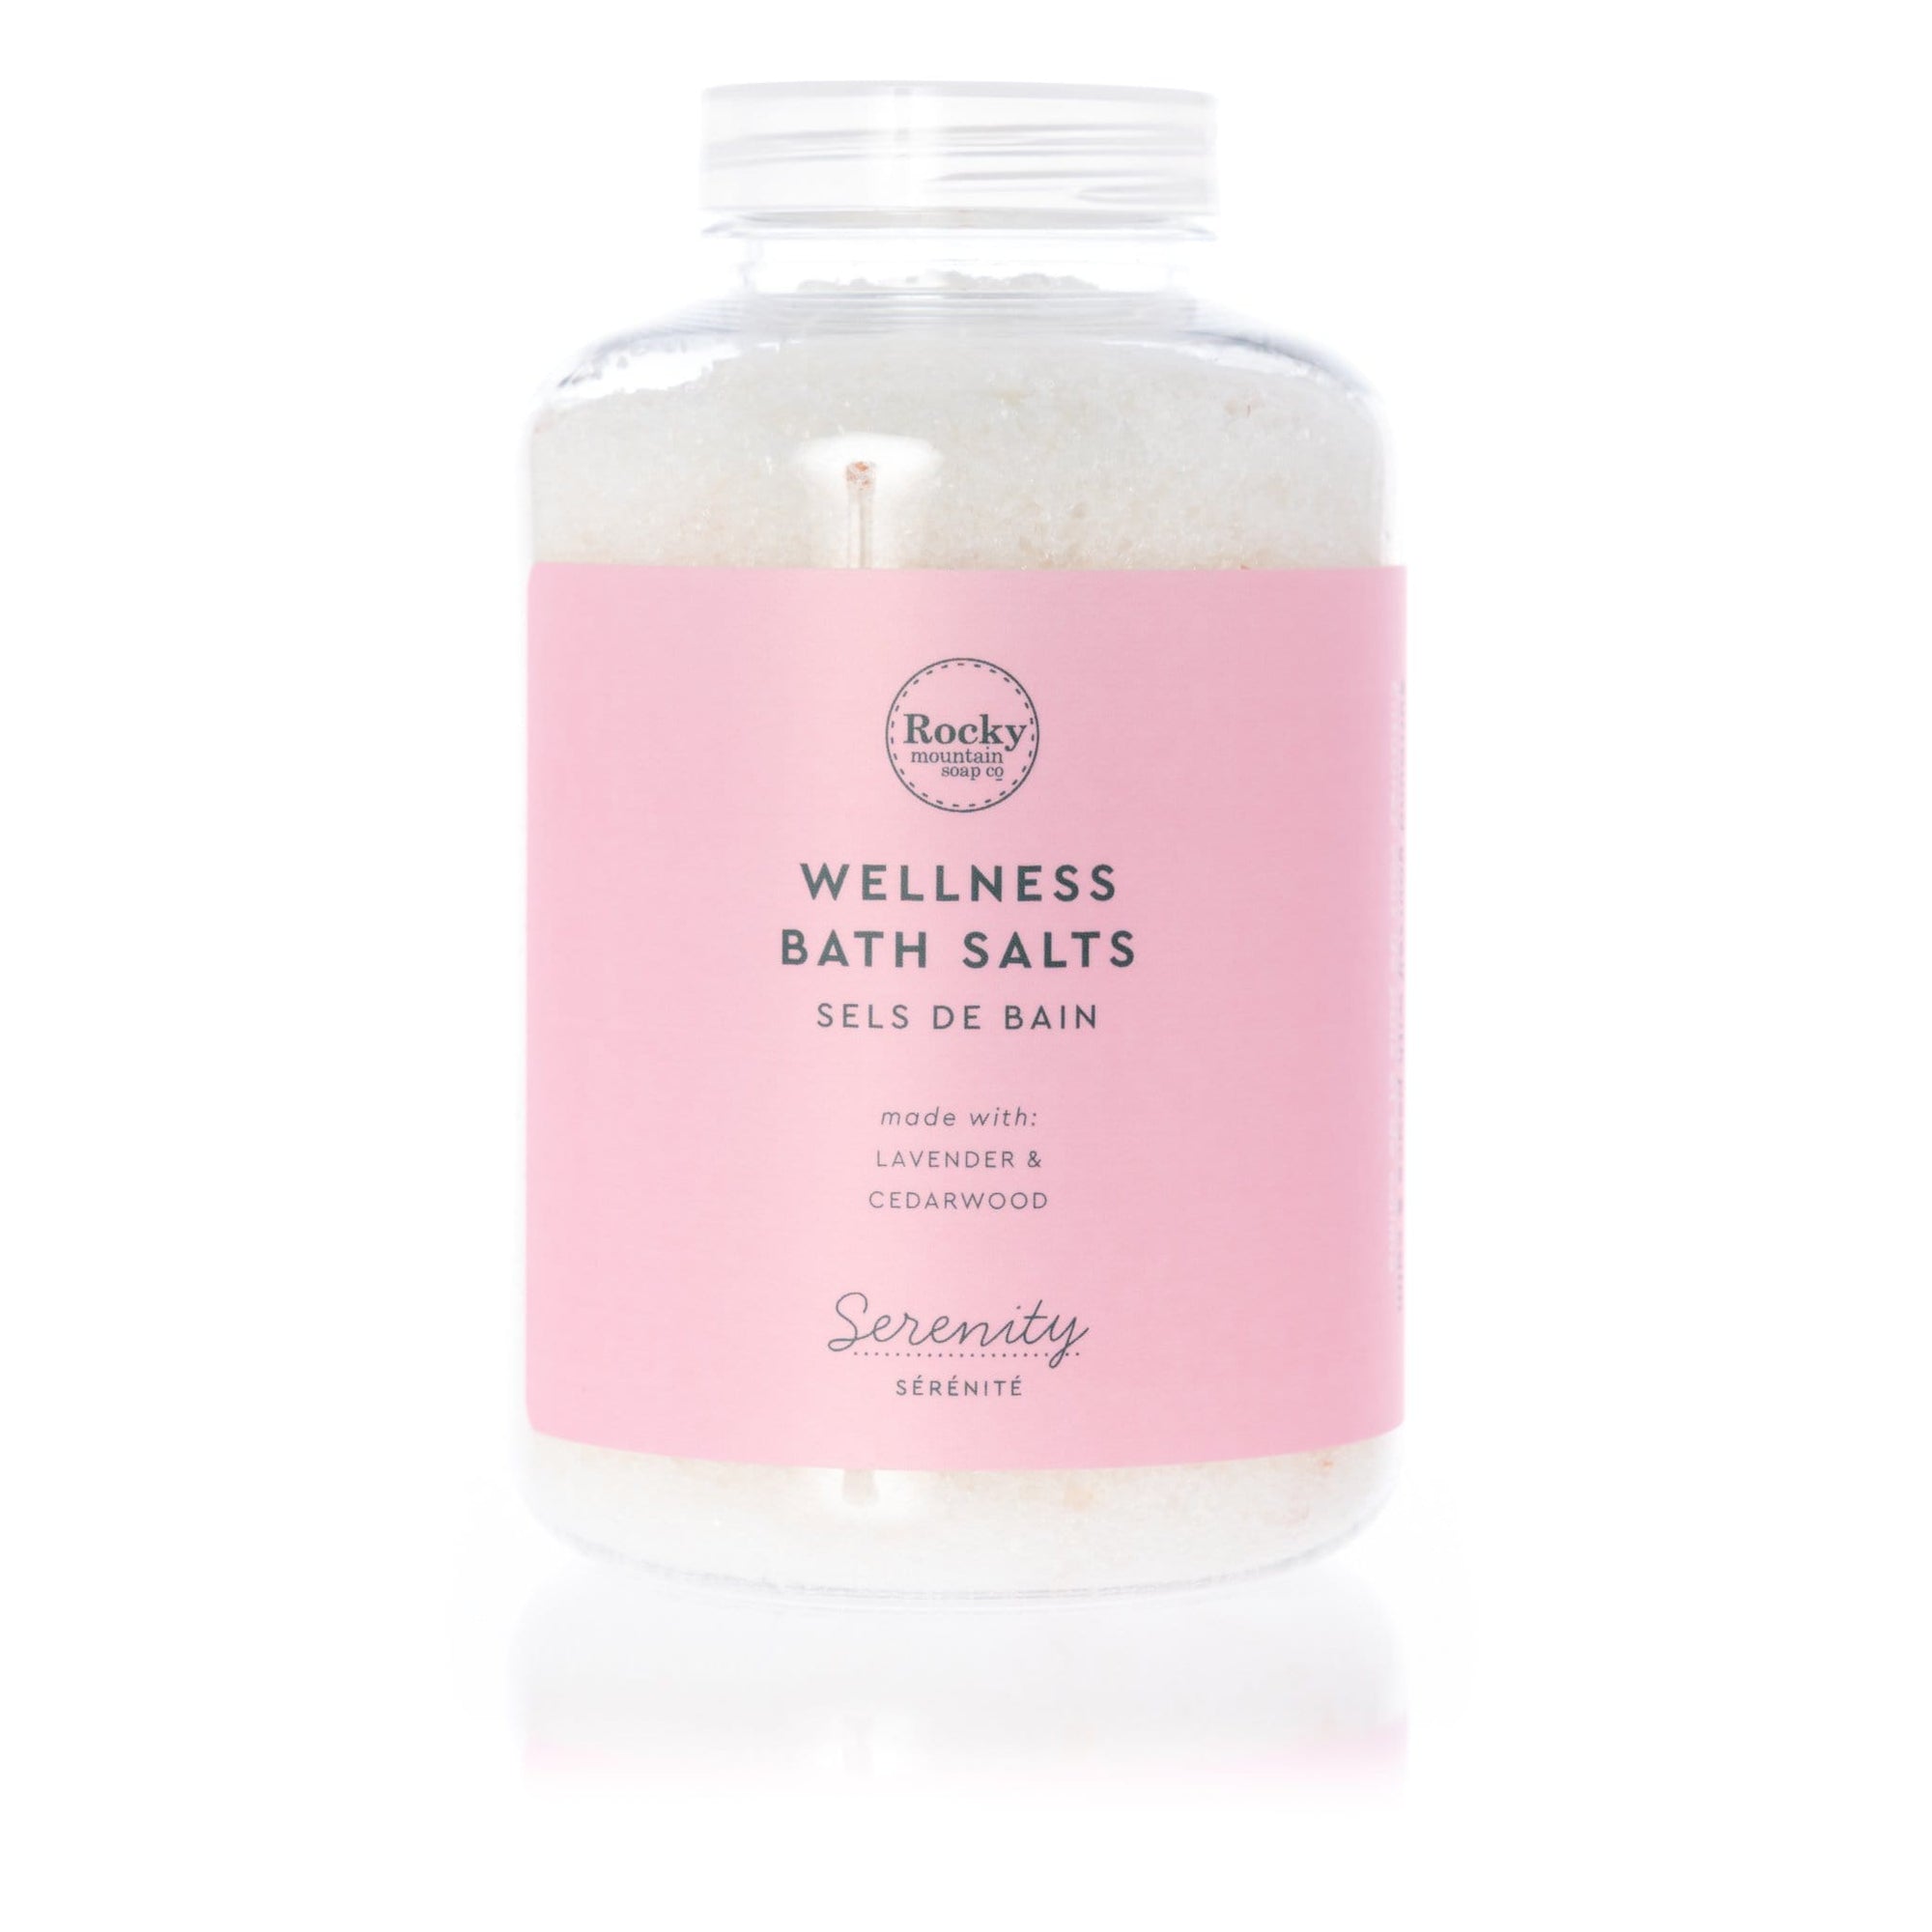 Serenity Wellness Bath Salts